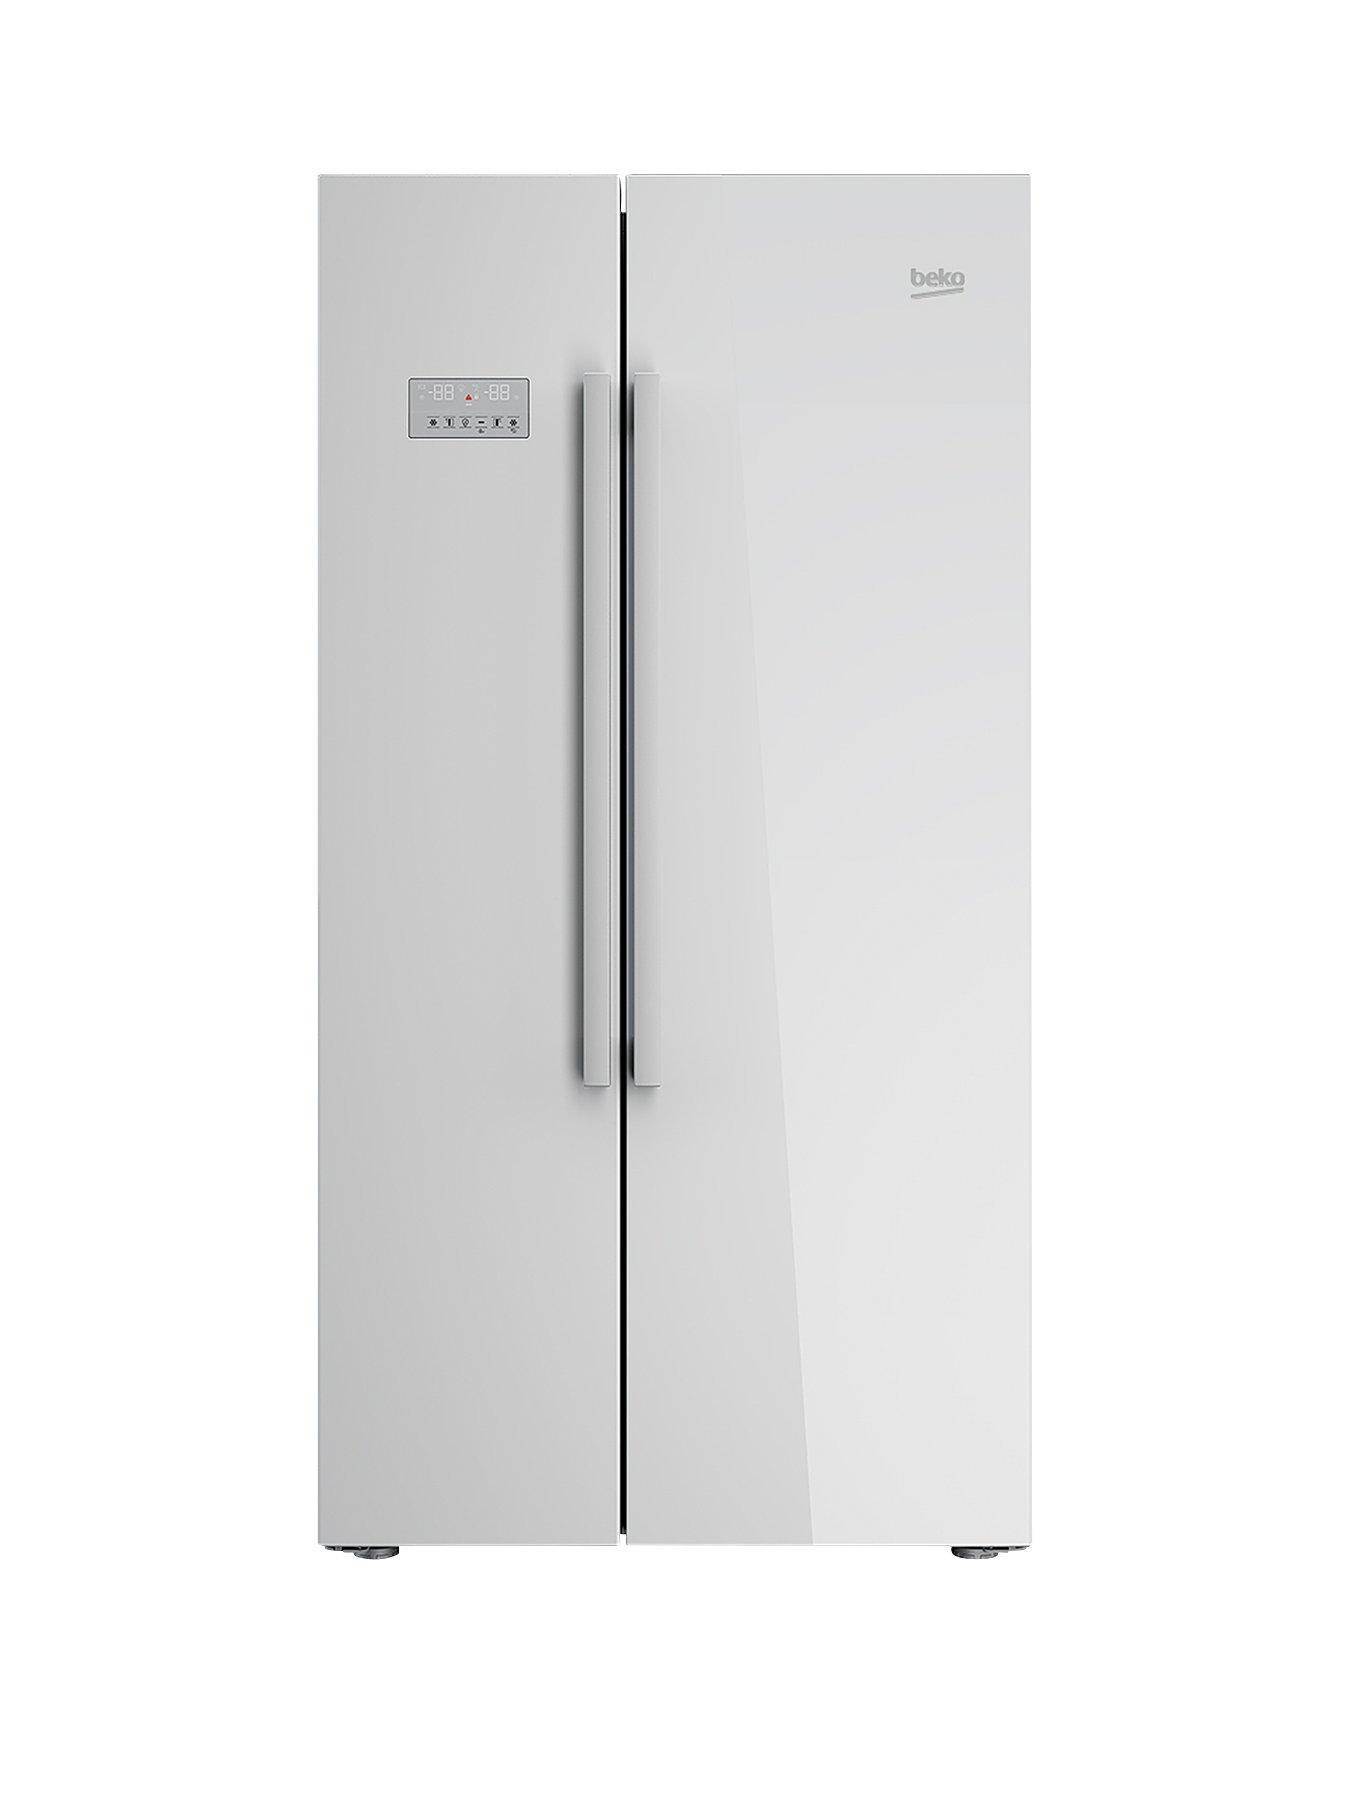 Beko Asl141W Ecosmart American Style Fridge Freezer With Neofrost Cooling Technology – White